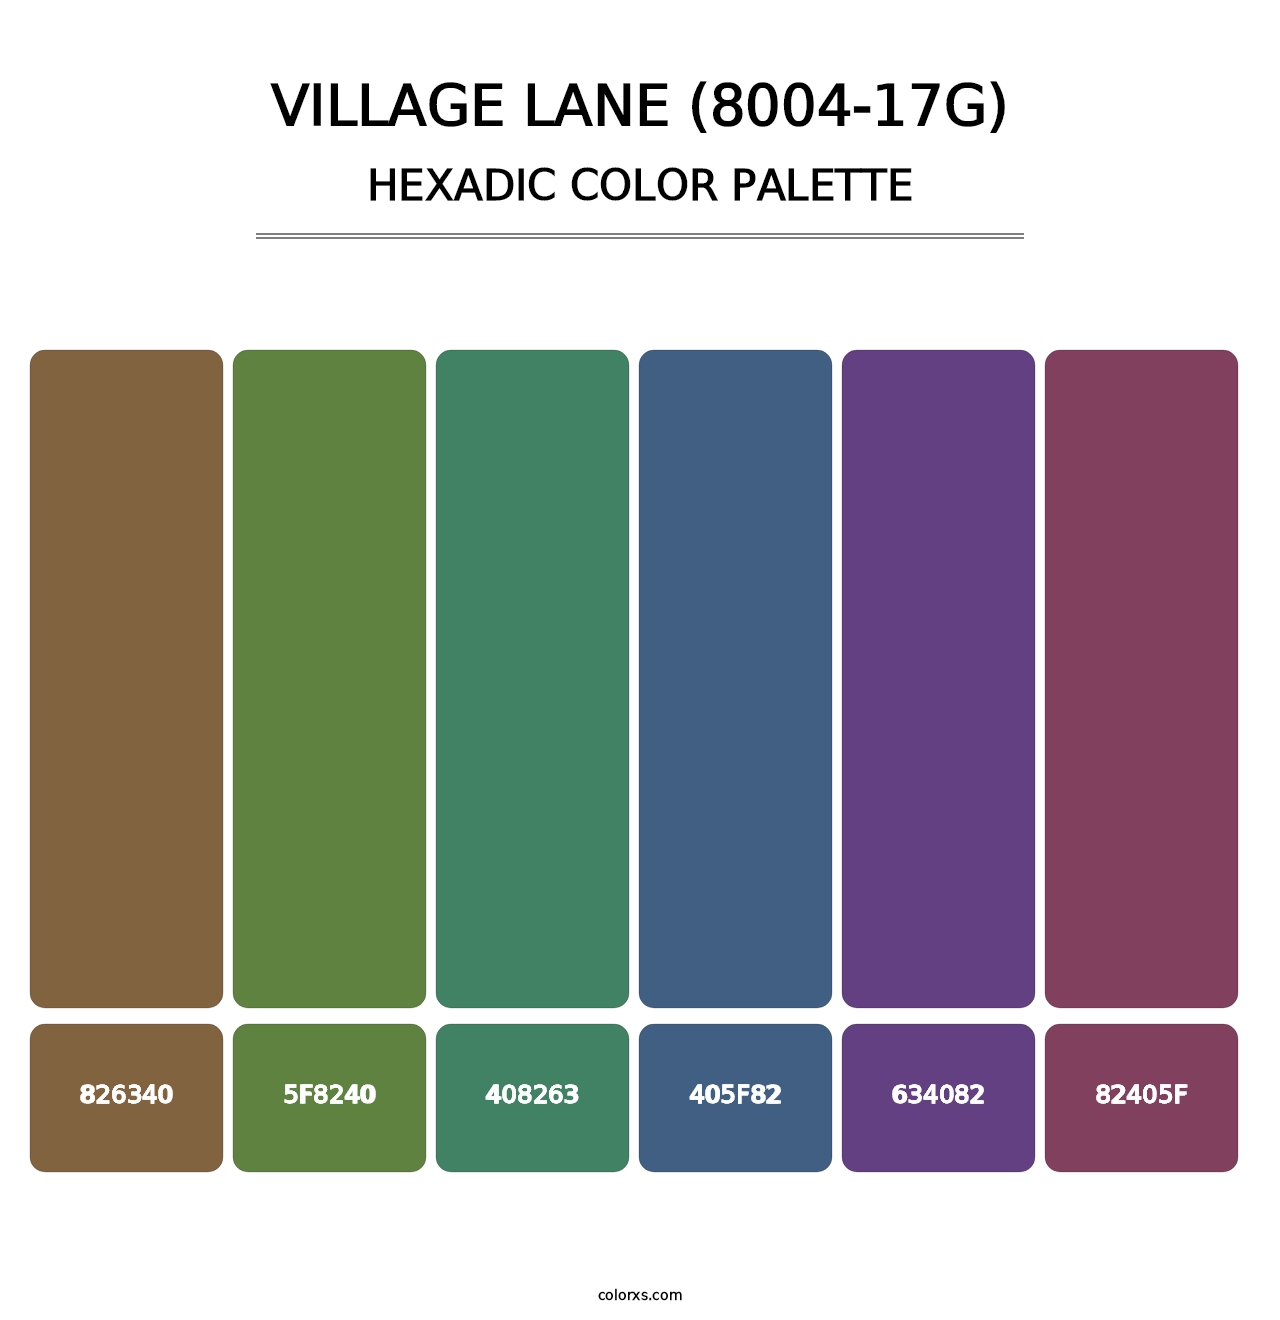 Village Lane (8004-17G) - Hexadic Color Palette